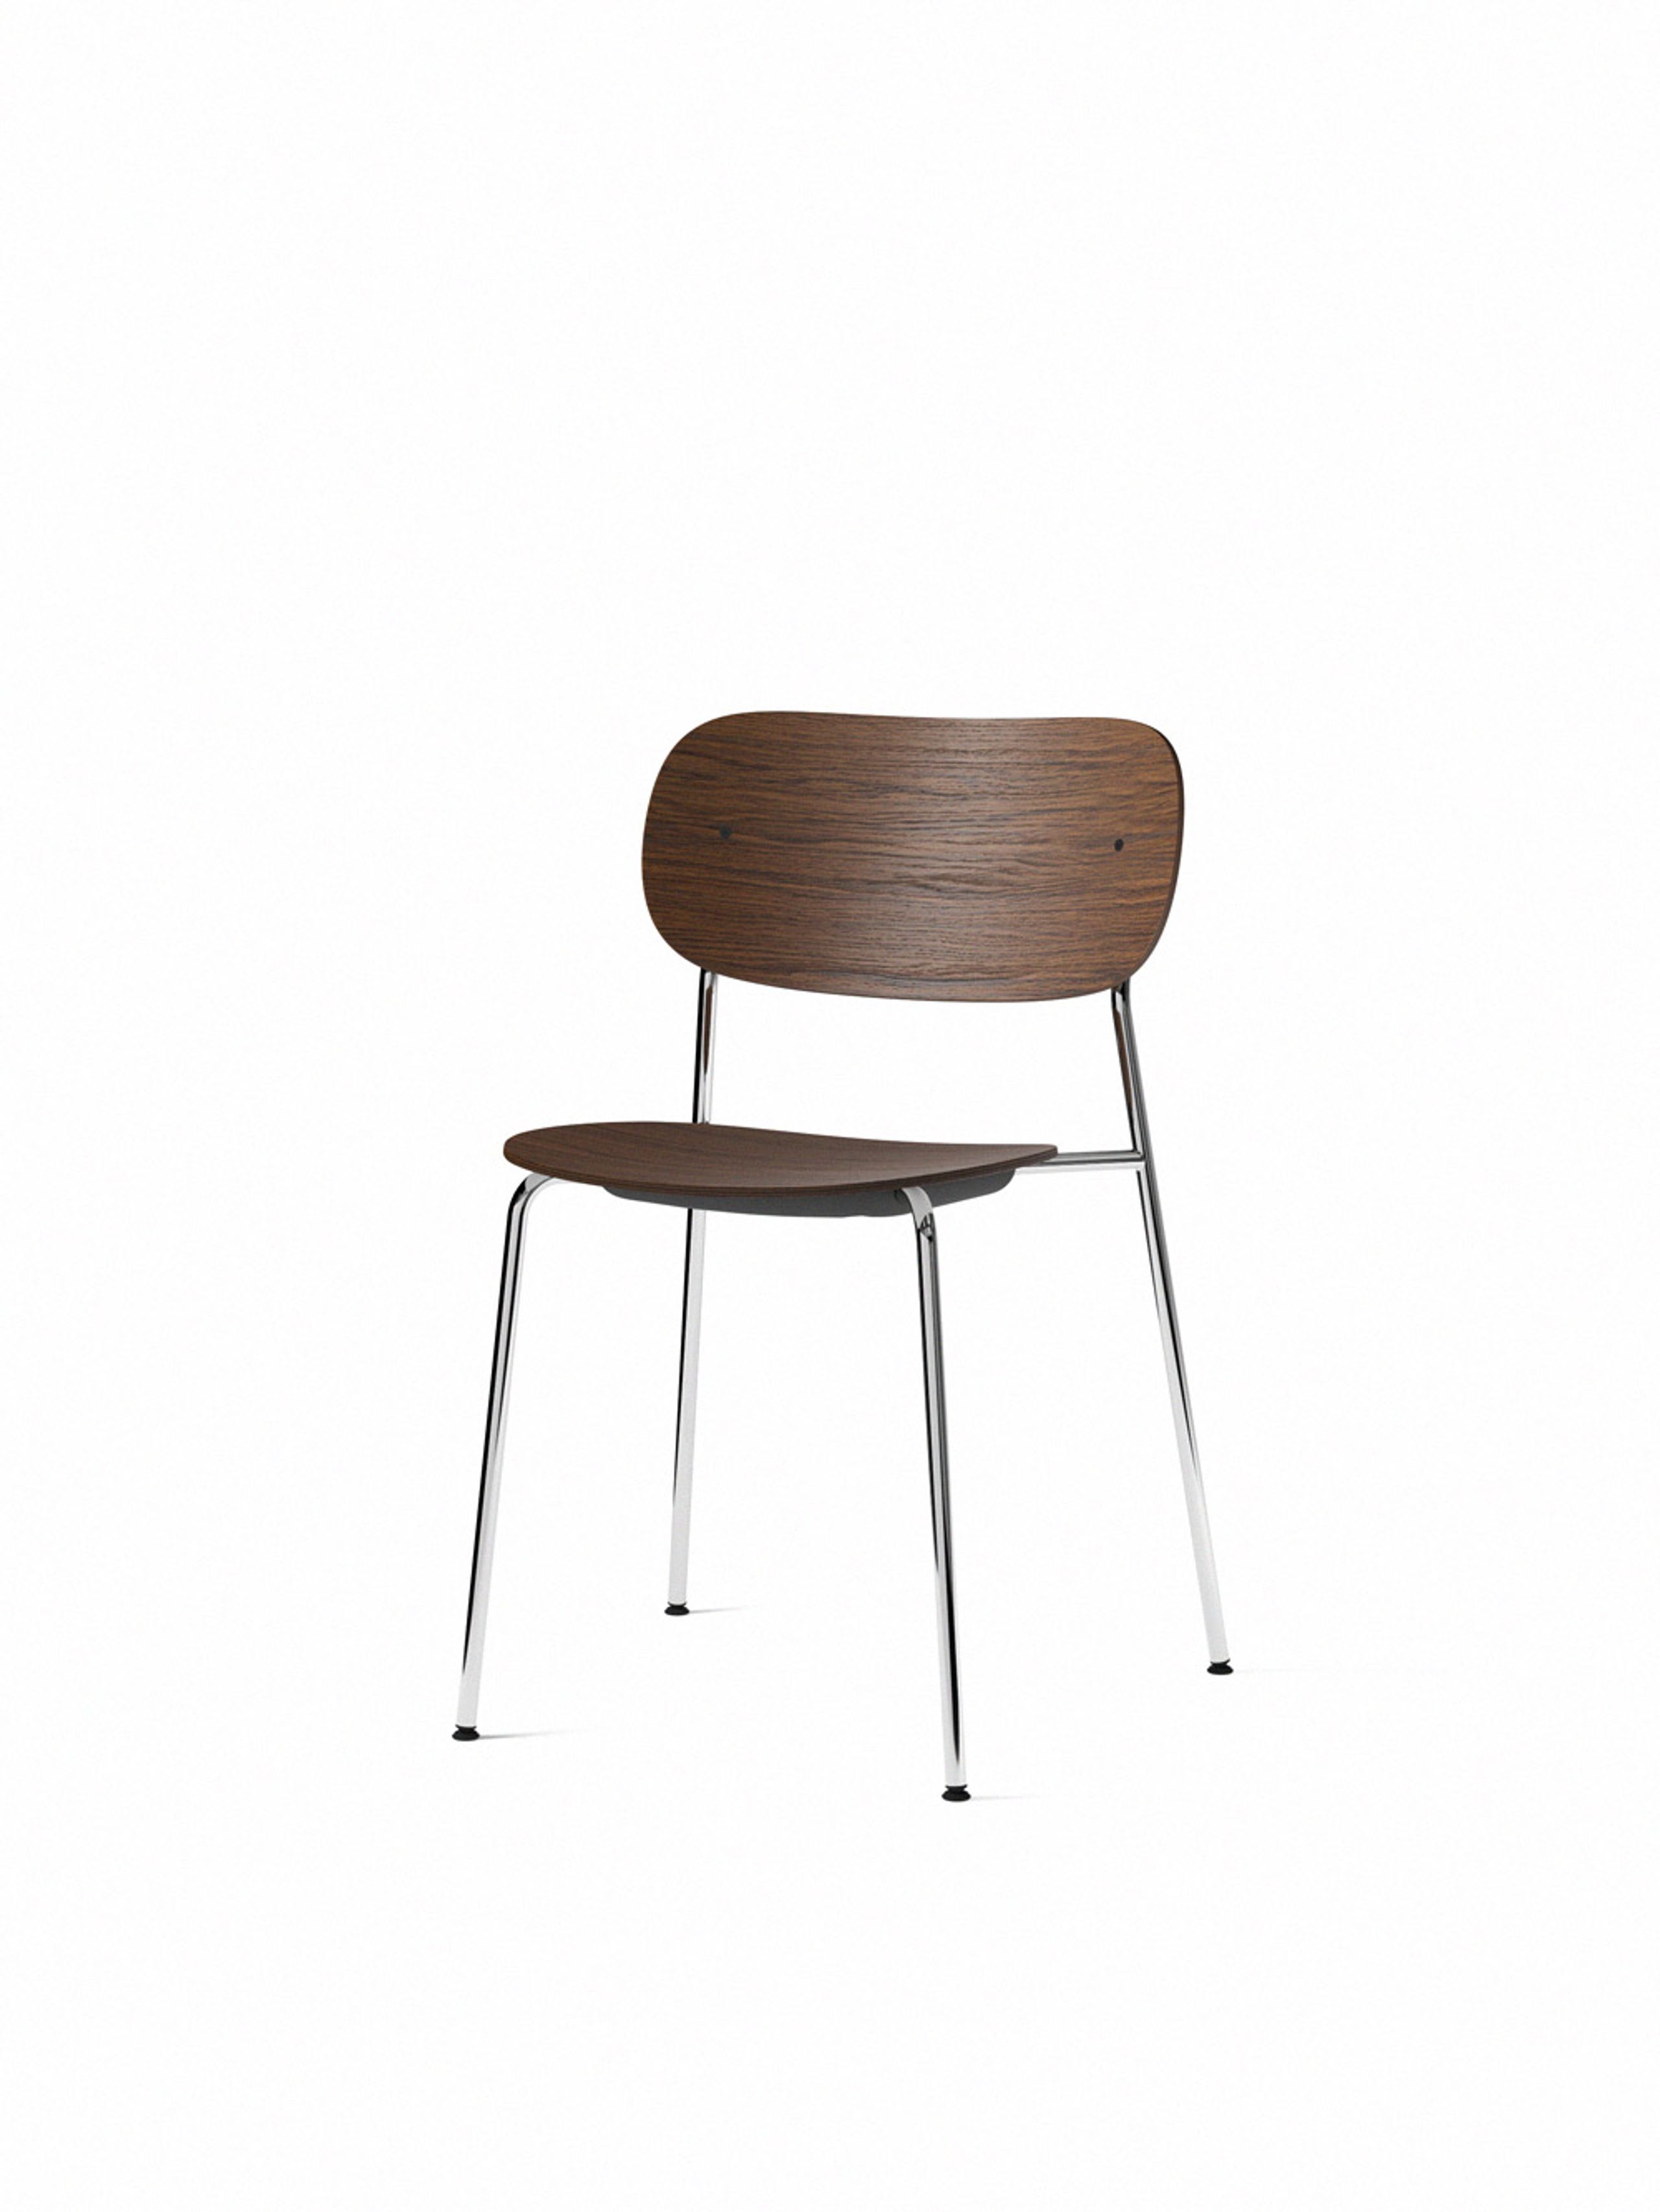 MENU - Cadeira - Co Chair / Chrome Base - Solid Dark Stained Oak